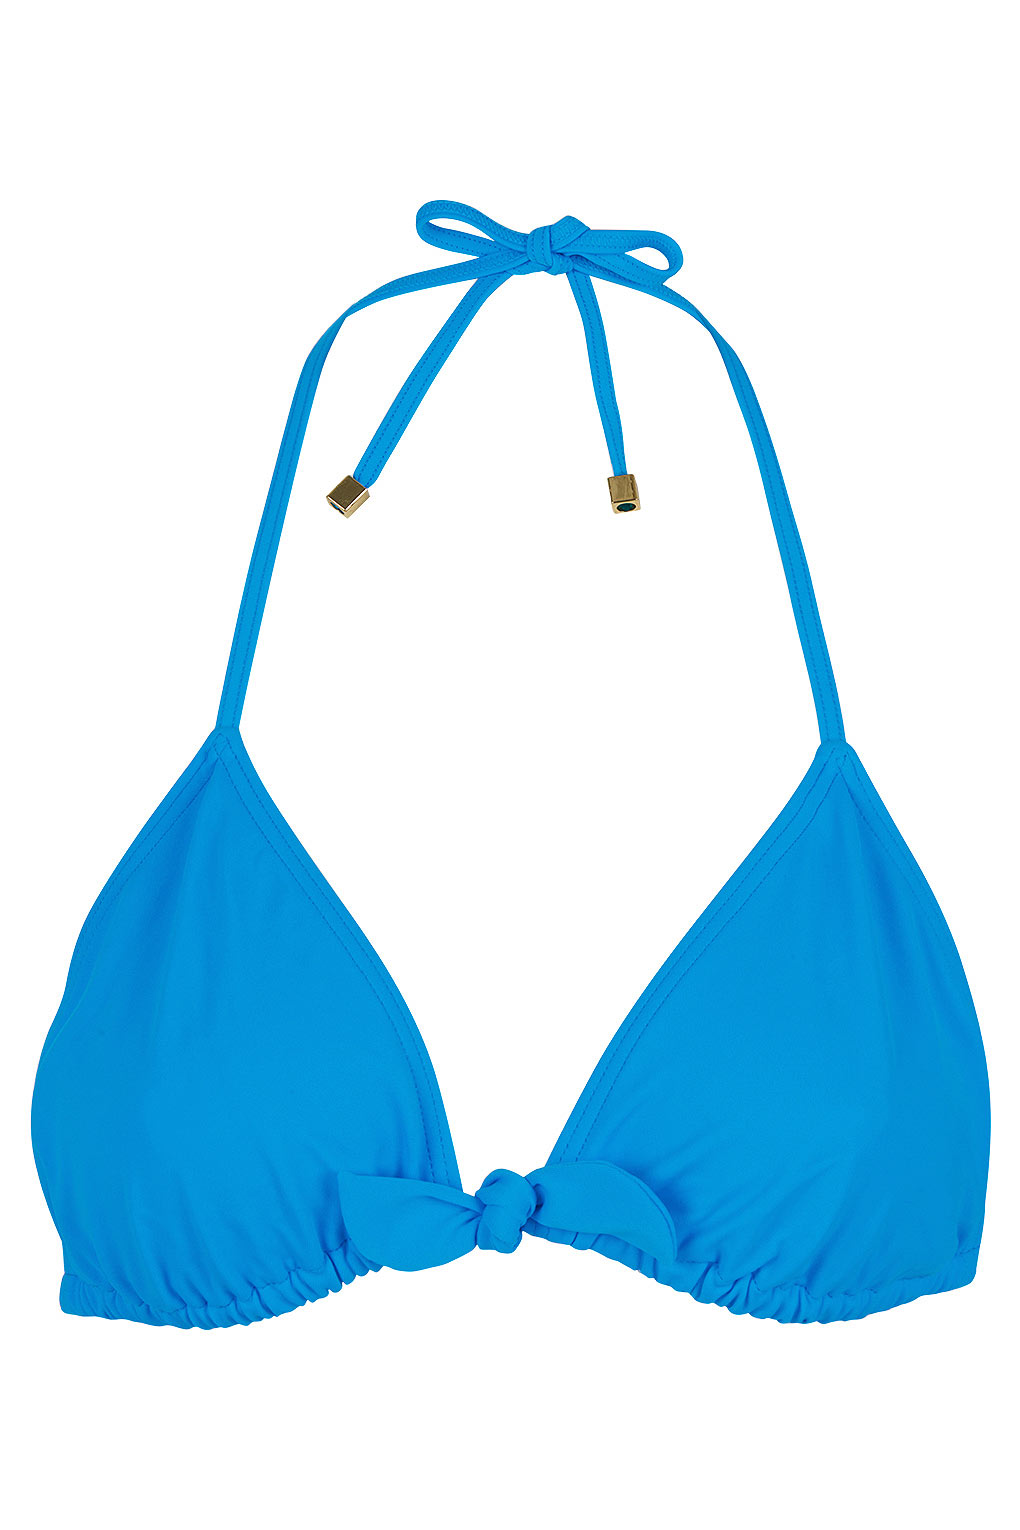 Topshop Azure Bow Triangle Bikini Top in Blue (azure blue) | Lyst